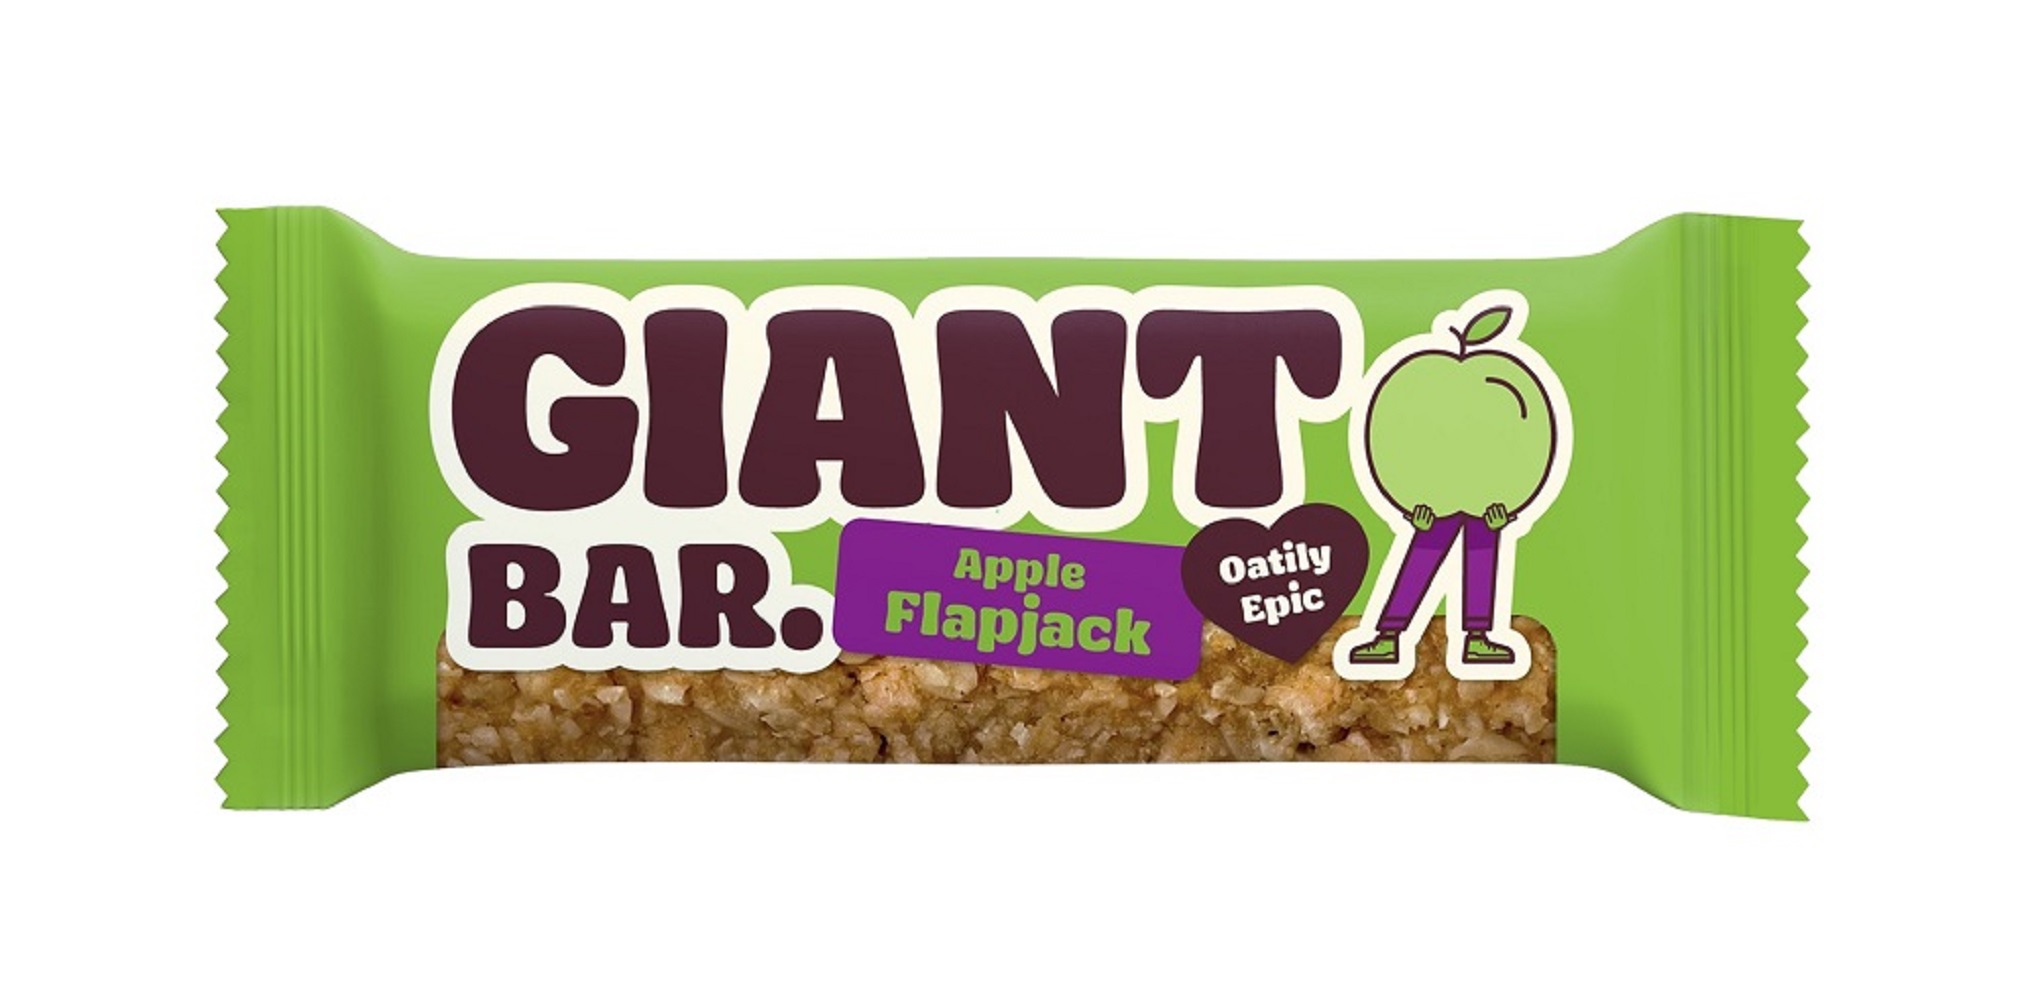 Giant Bar Apple